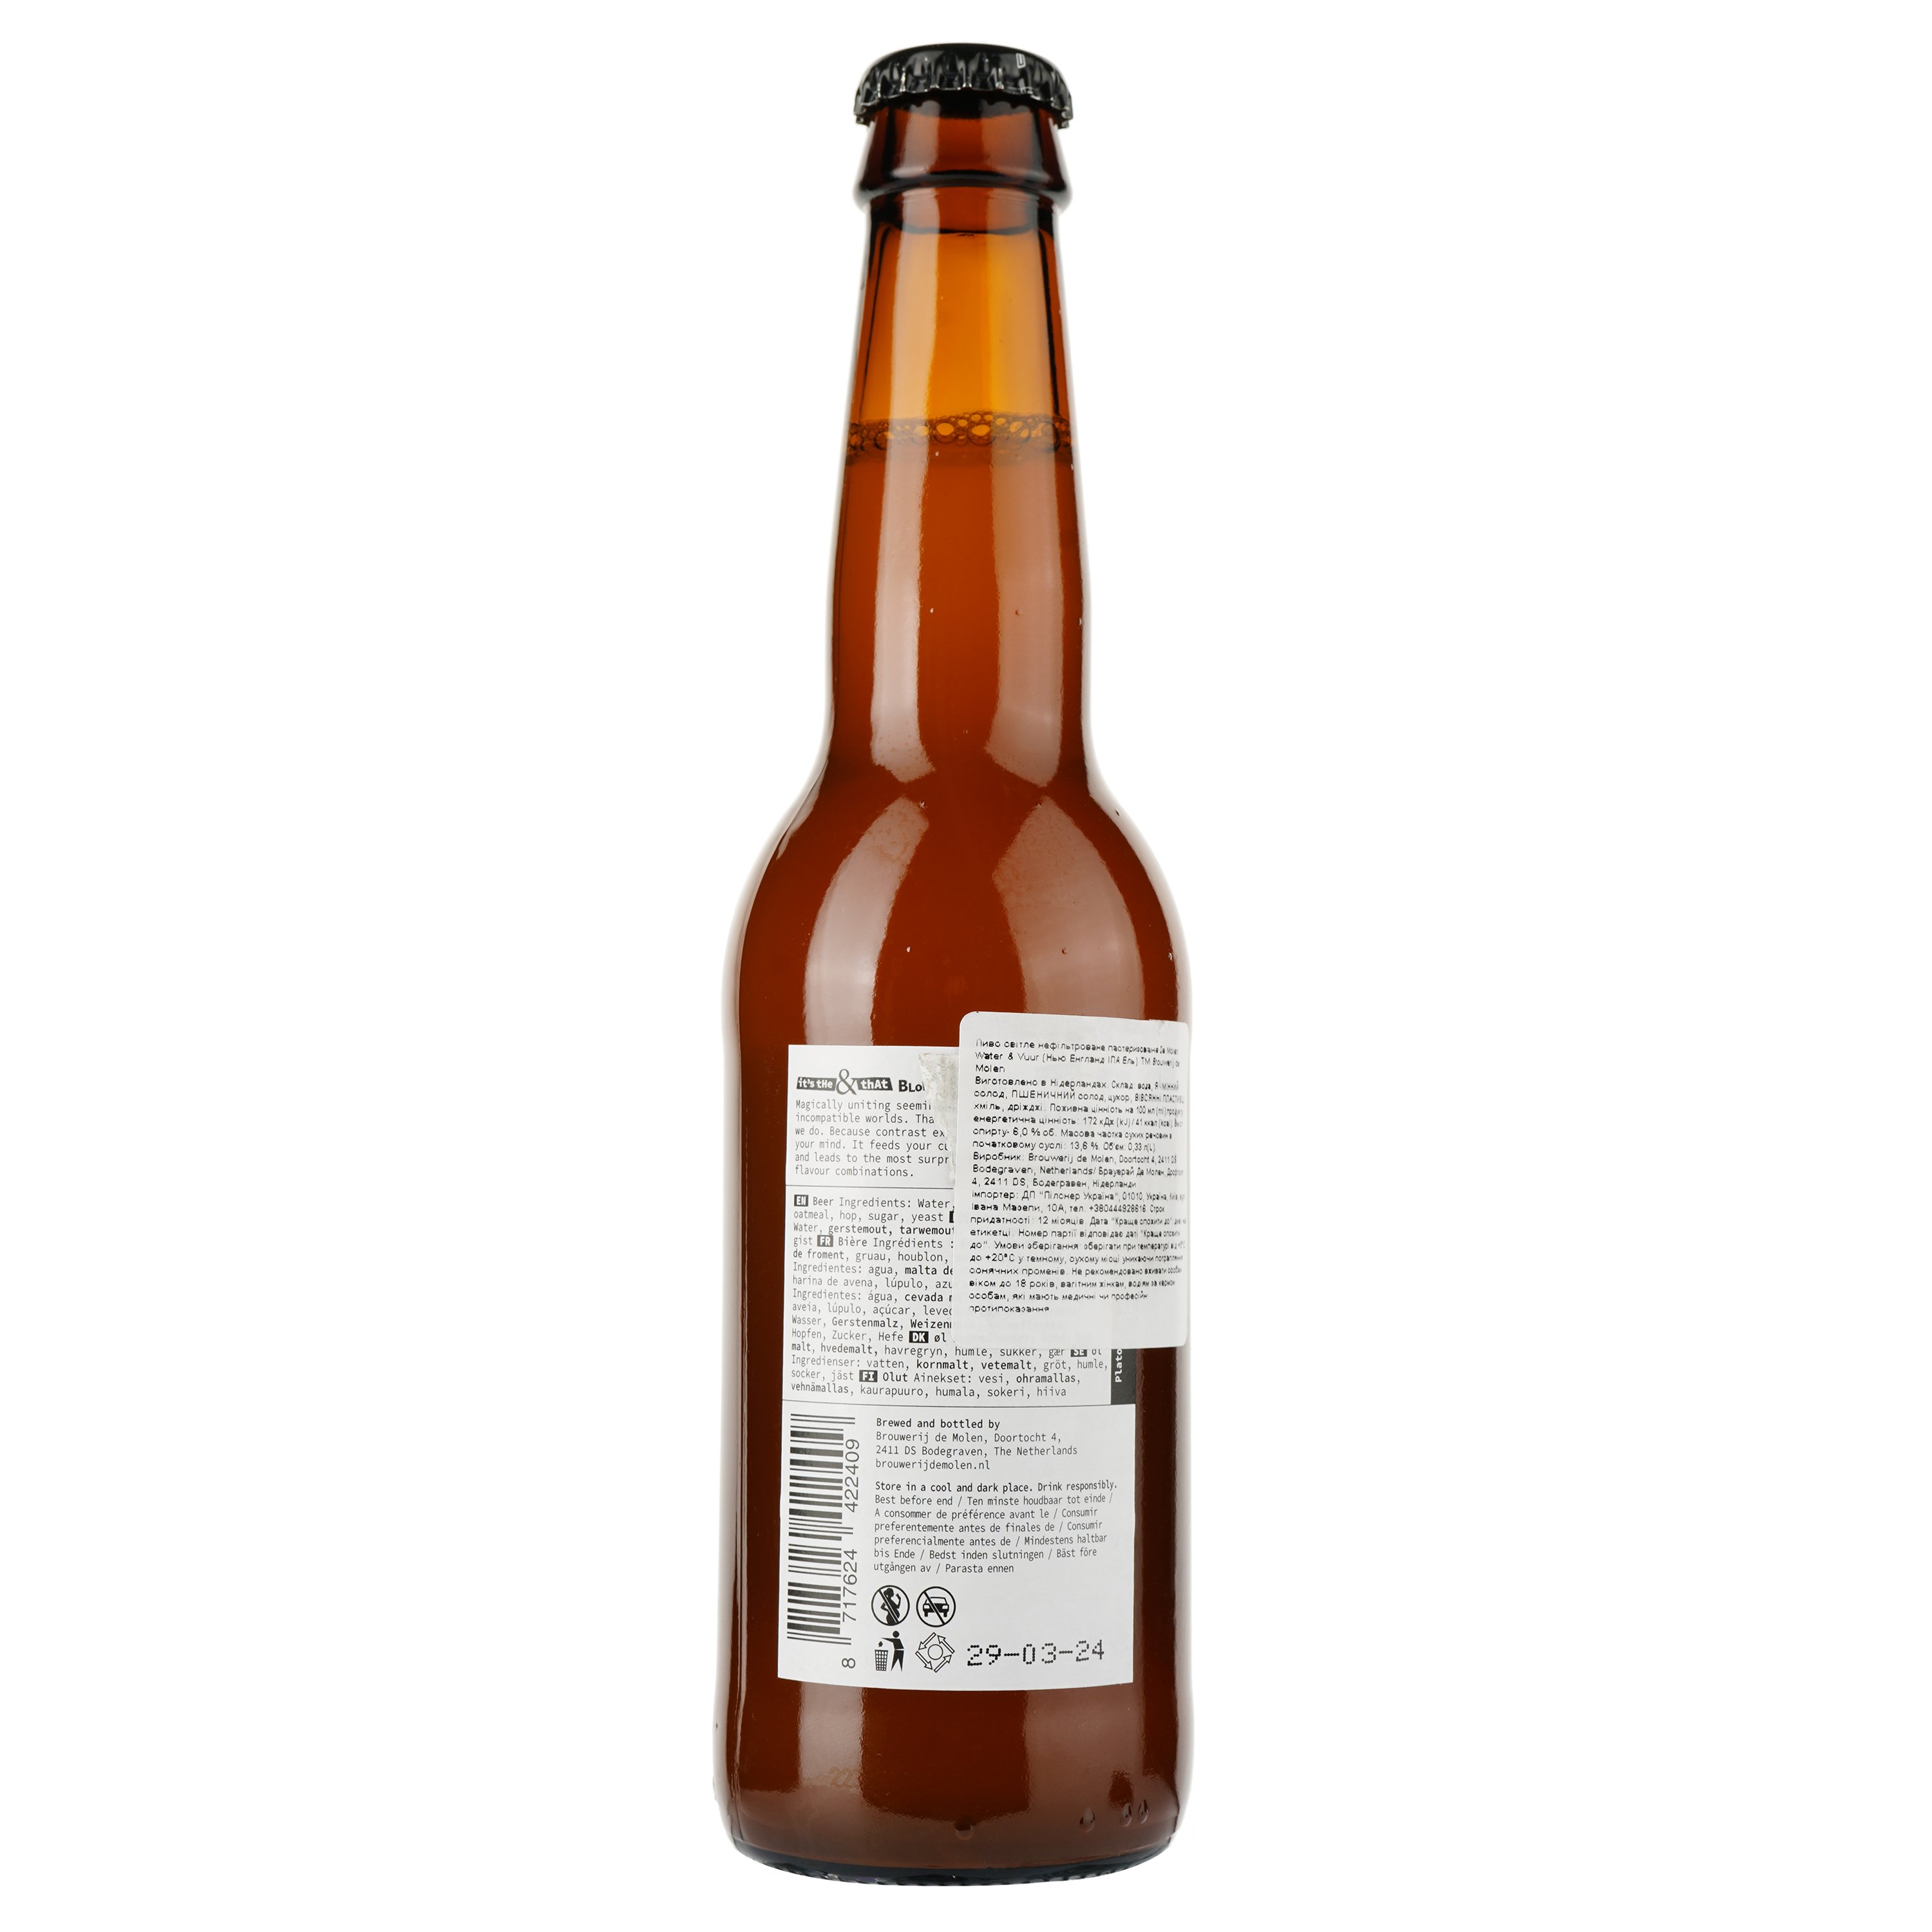 Пиво De Molen Water & Vuur Neipa, светлое, 6%, 0,33 л - фото 2